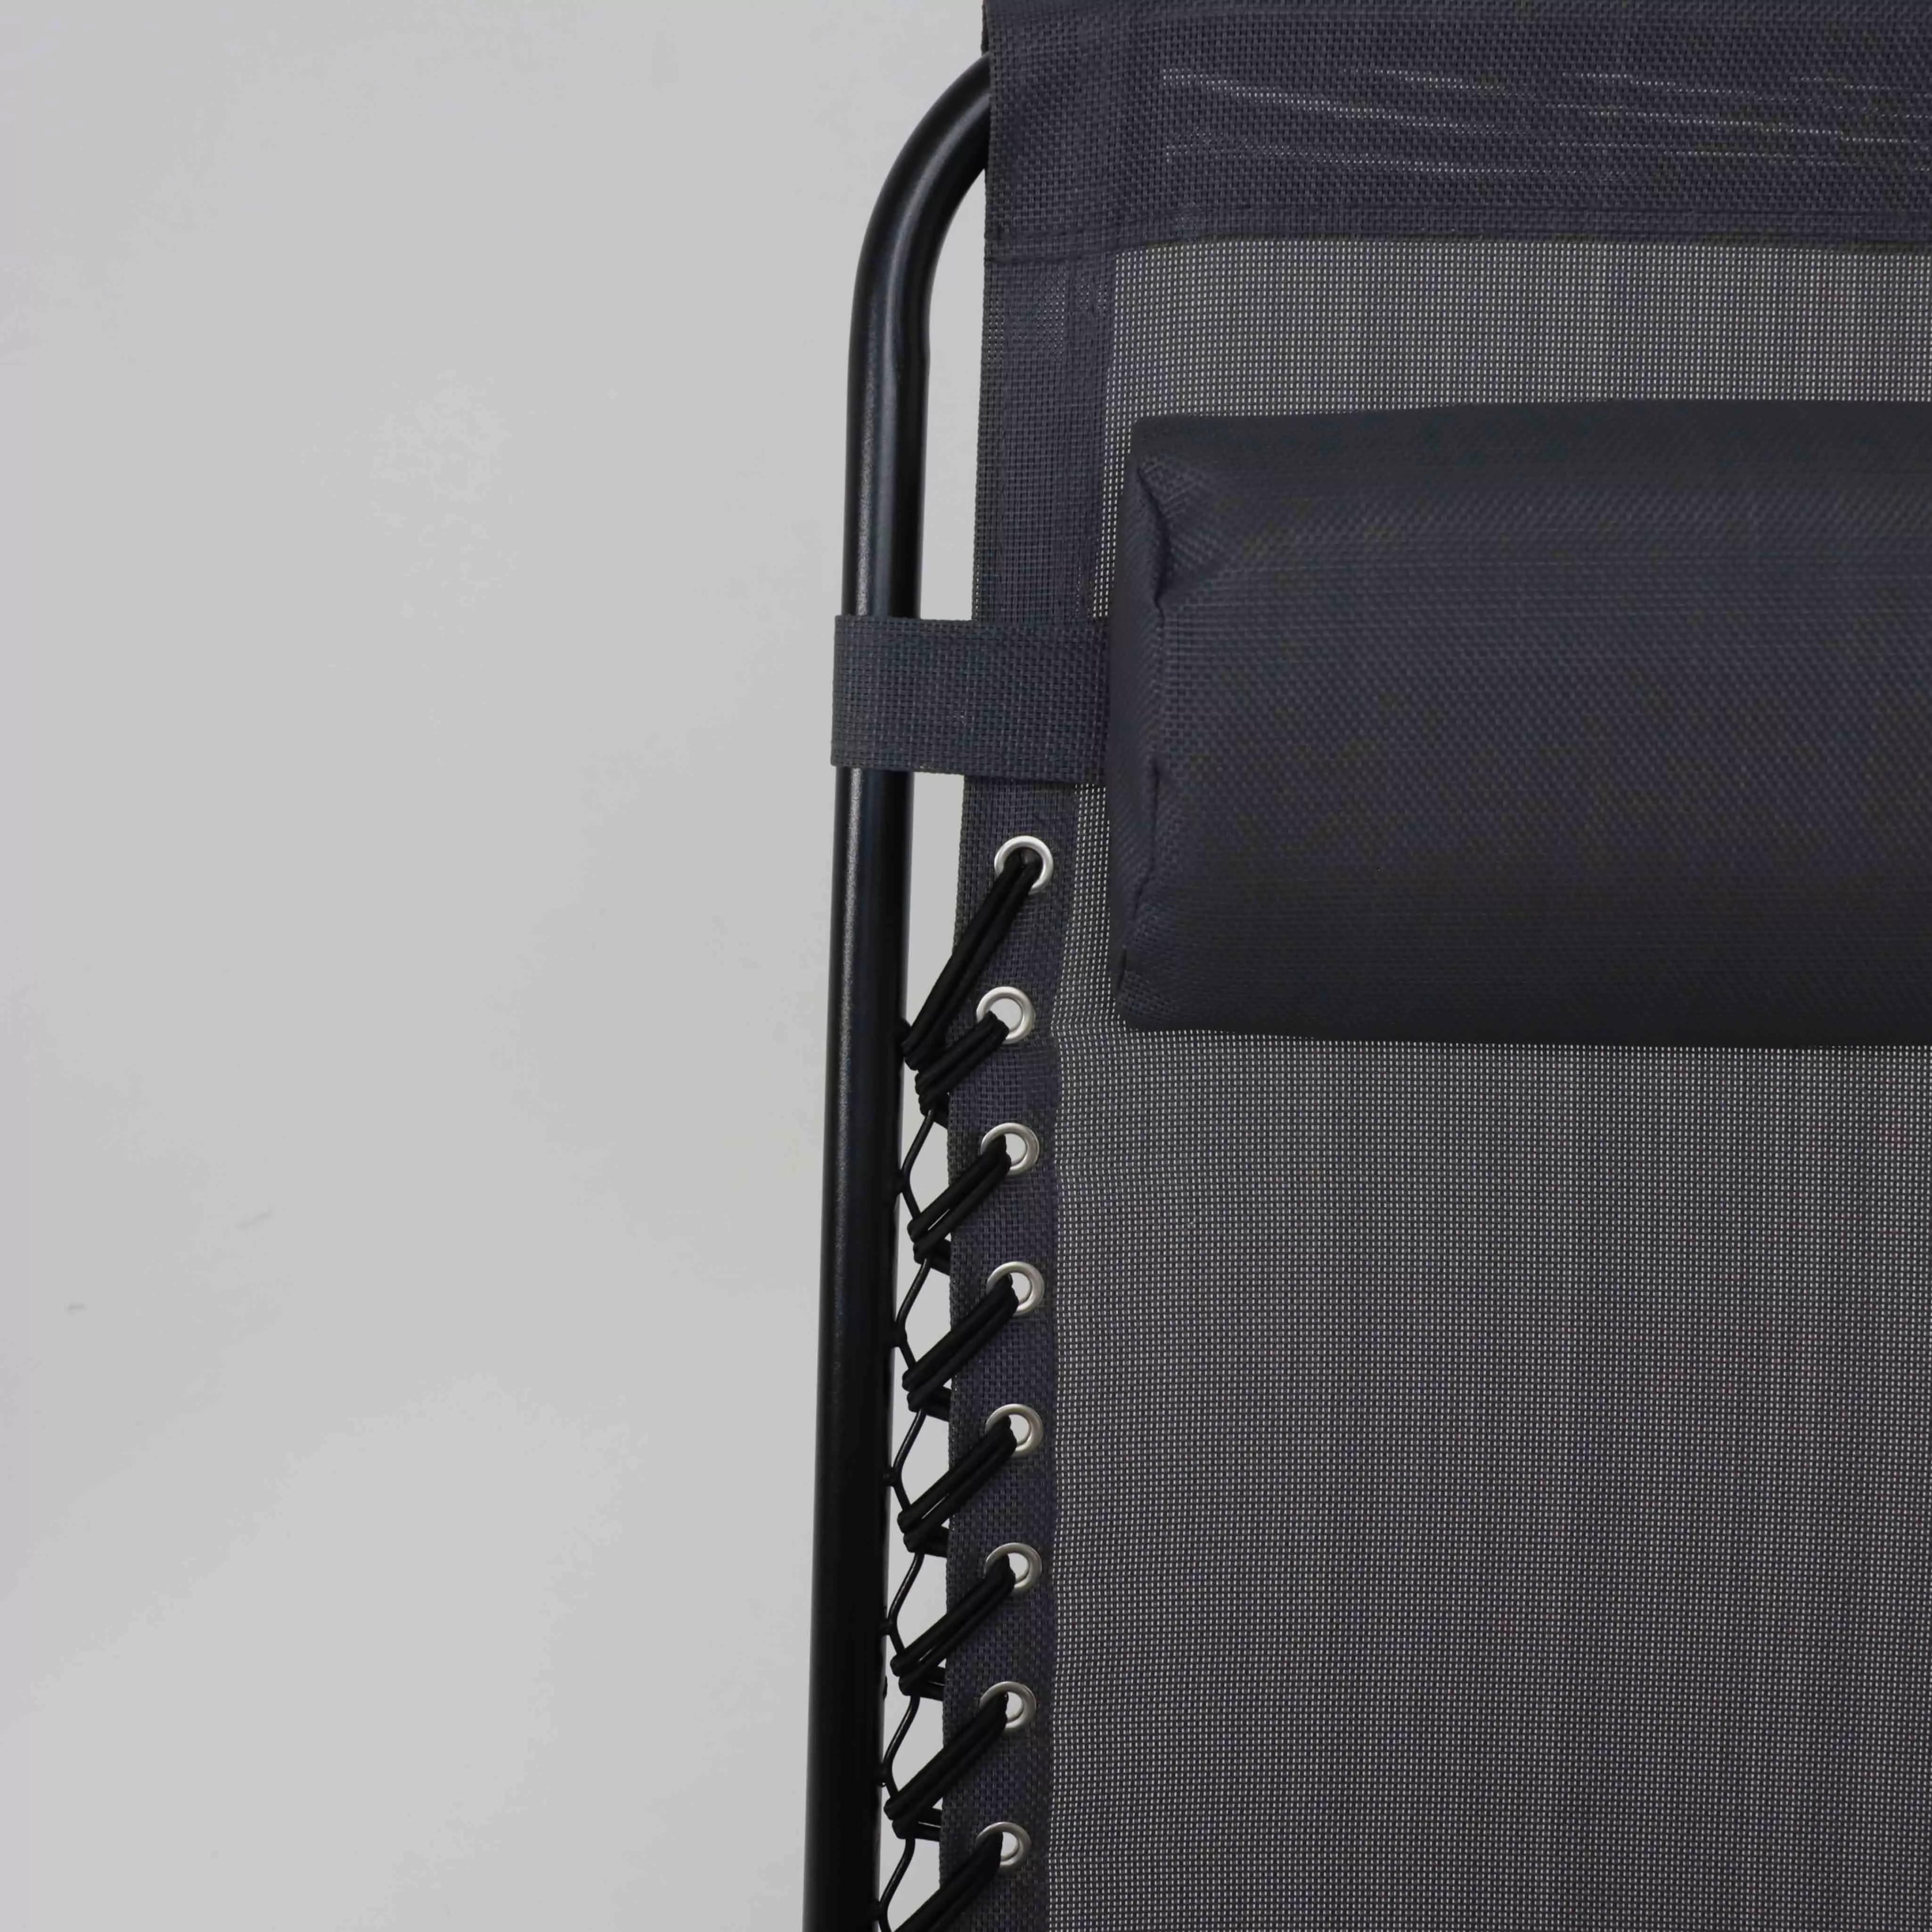 Кресло складное Relax серый ткань 87208